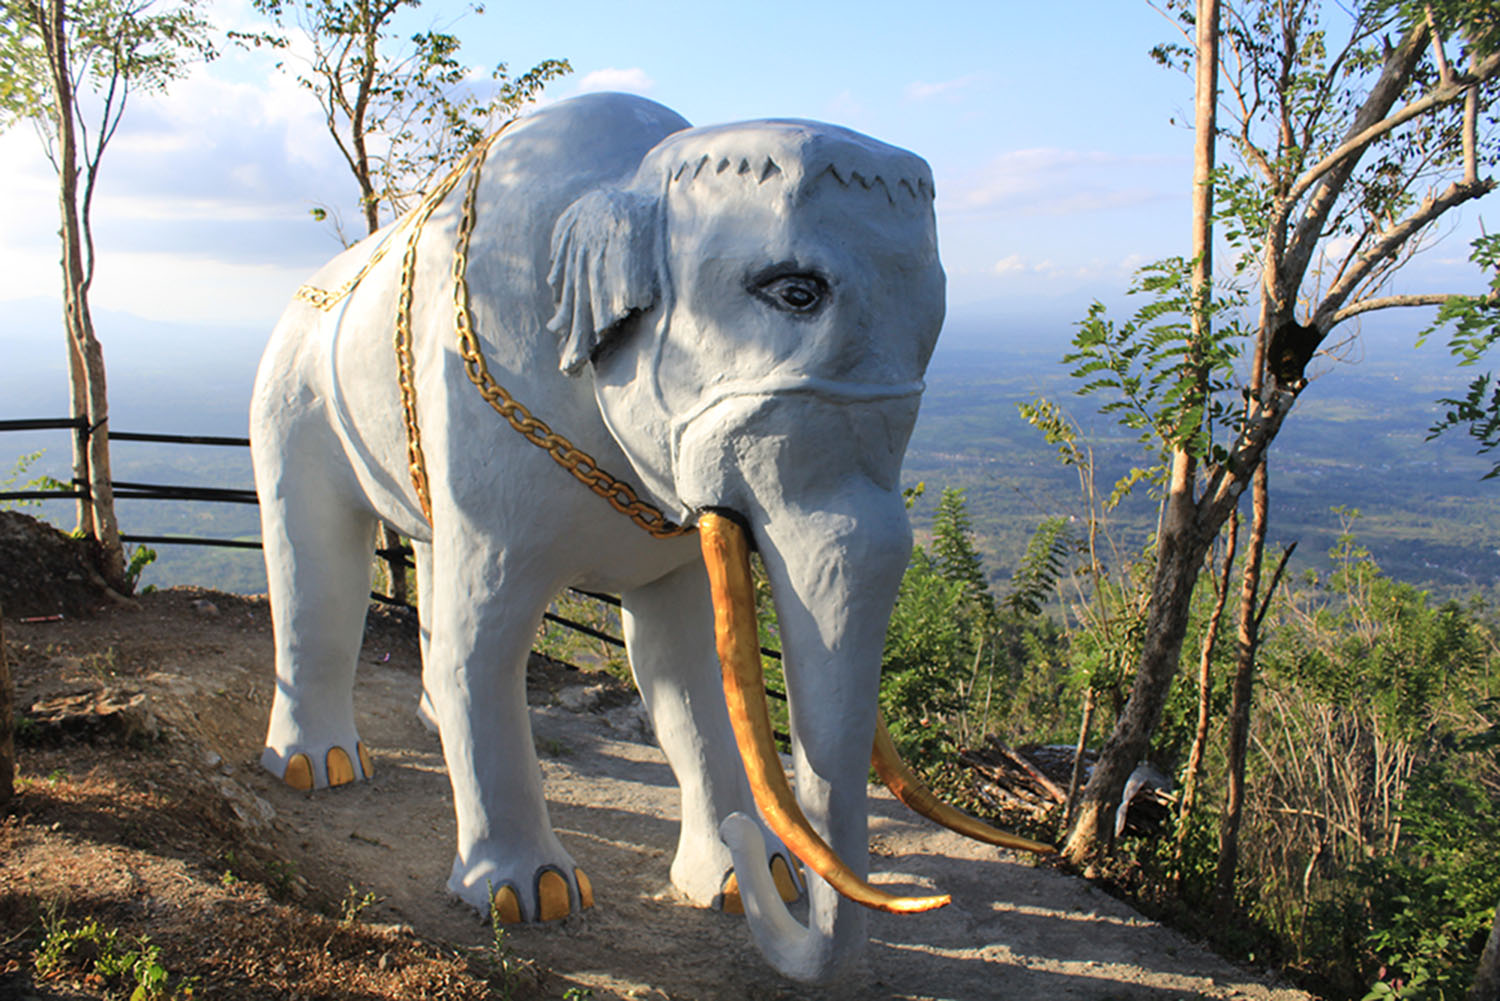 Pesona Gajah Mungkur diatas Bukit di Magelang